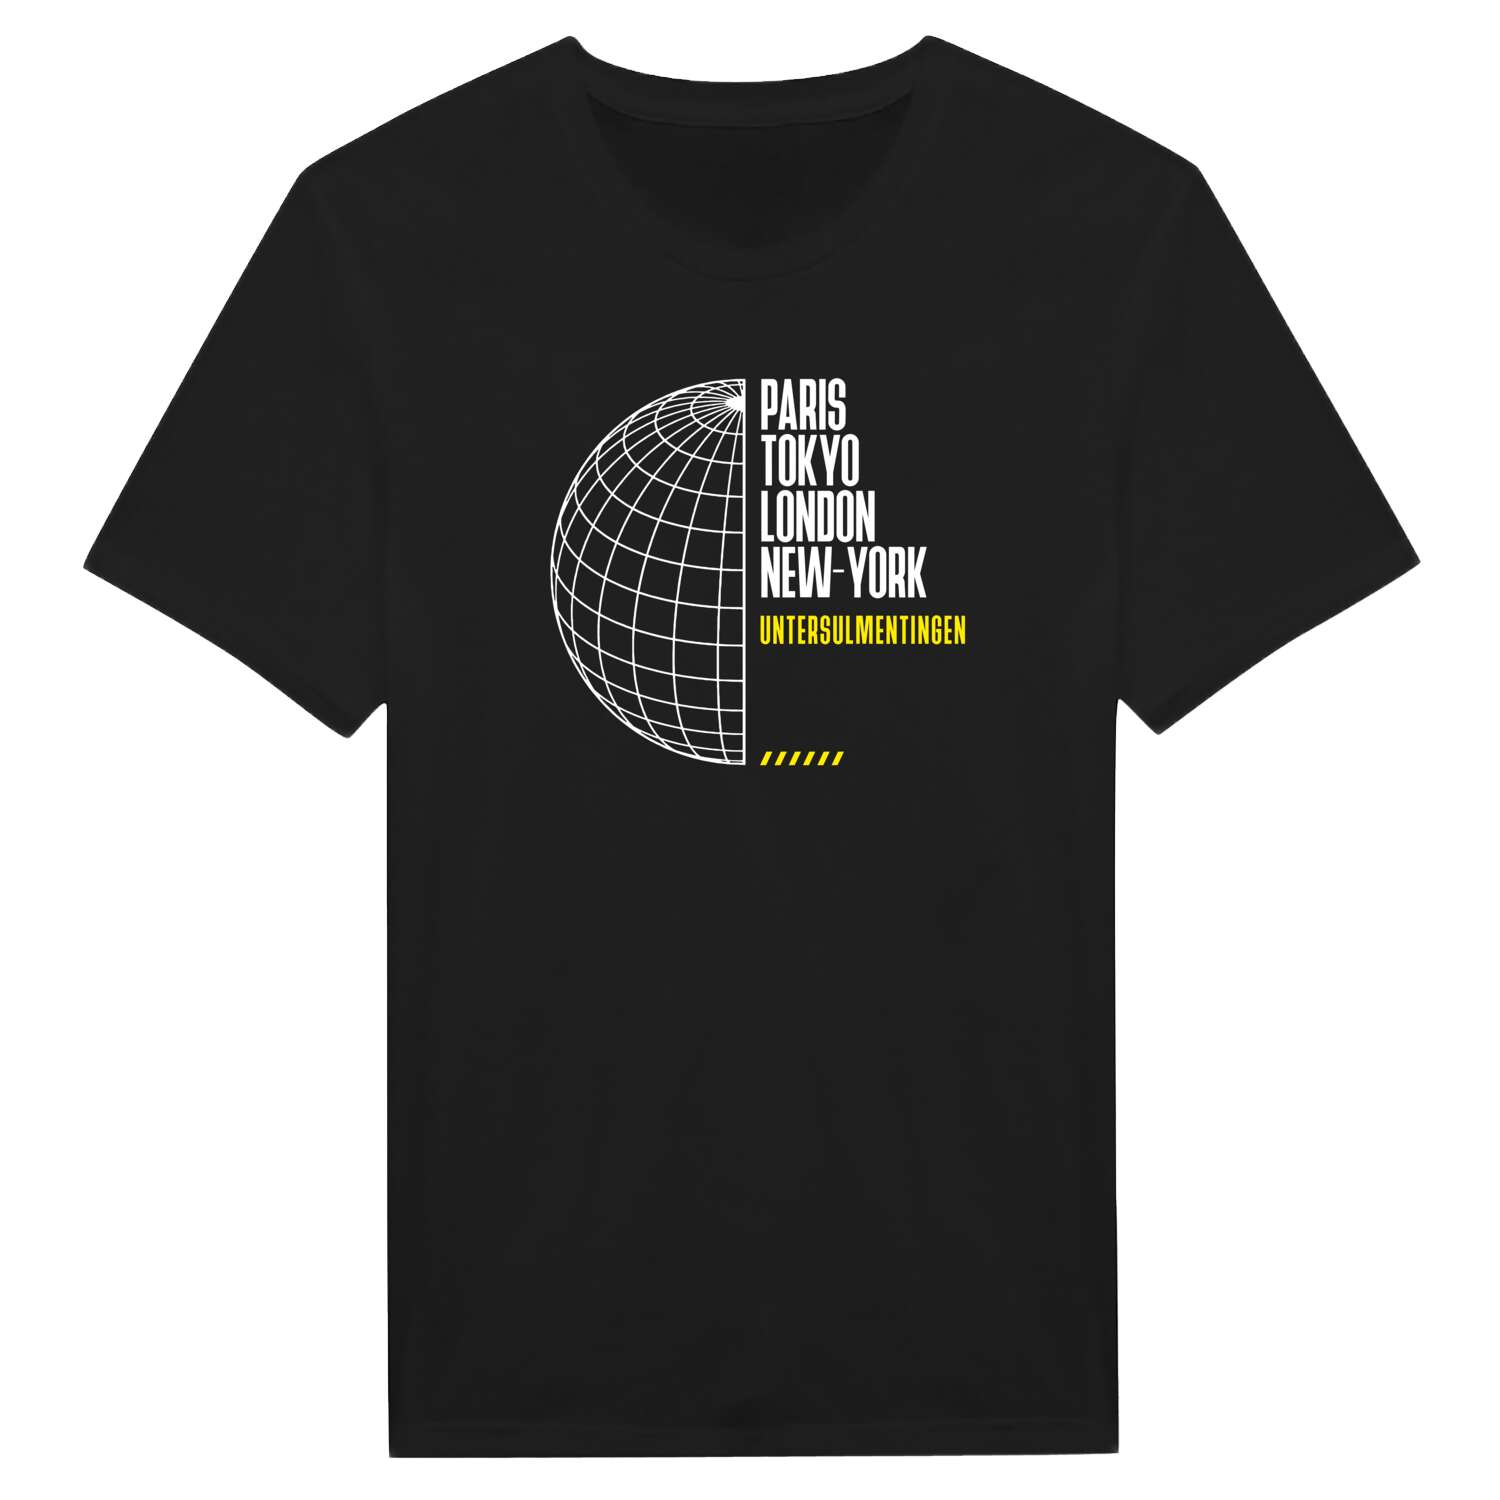 Untersulmentingen T-Shirt »Paris Tokyo London«